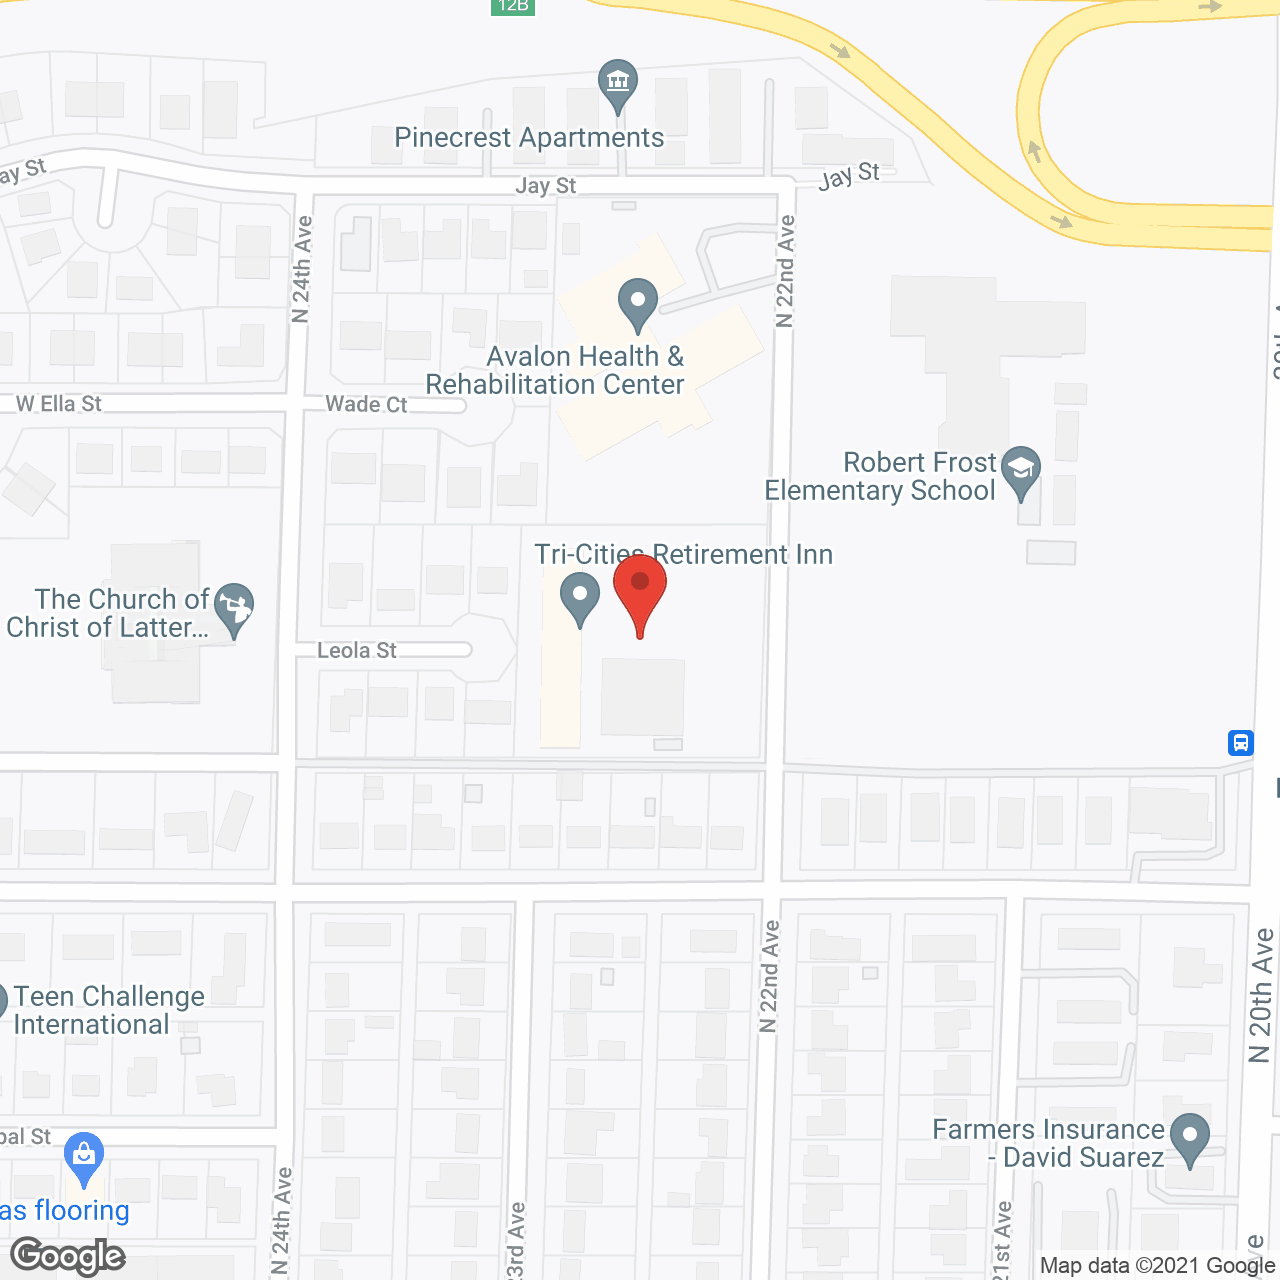 Tri-Cities Retirement Inn in google map